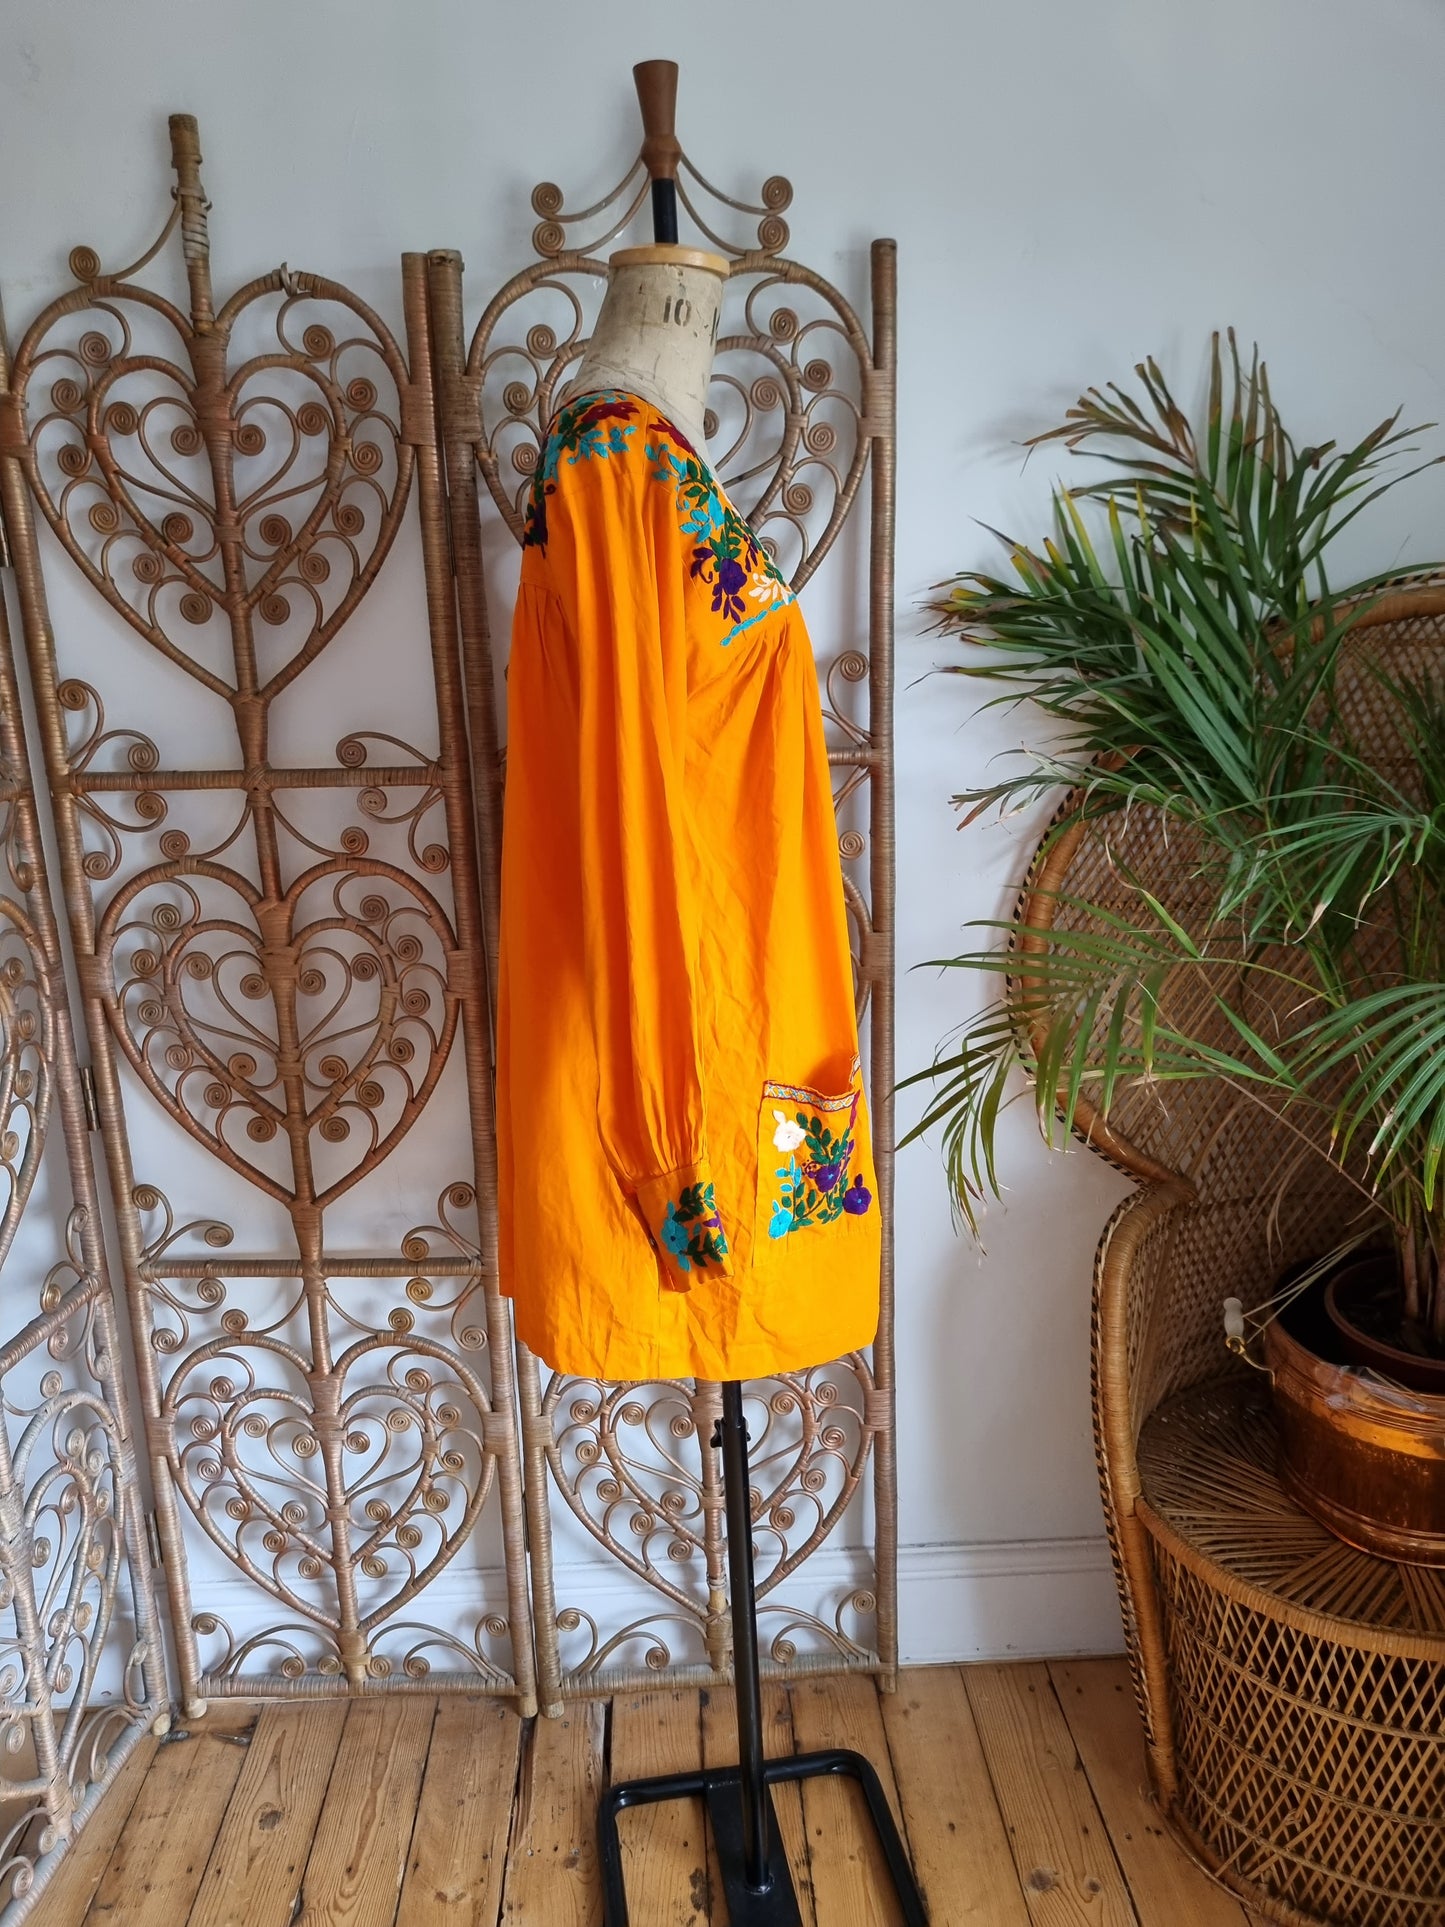 Vintage embroidered kaftan dress